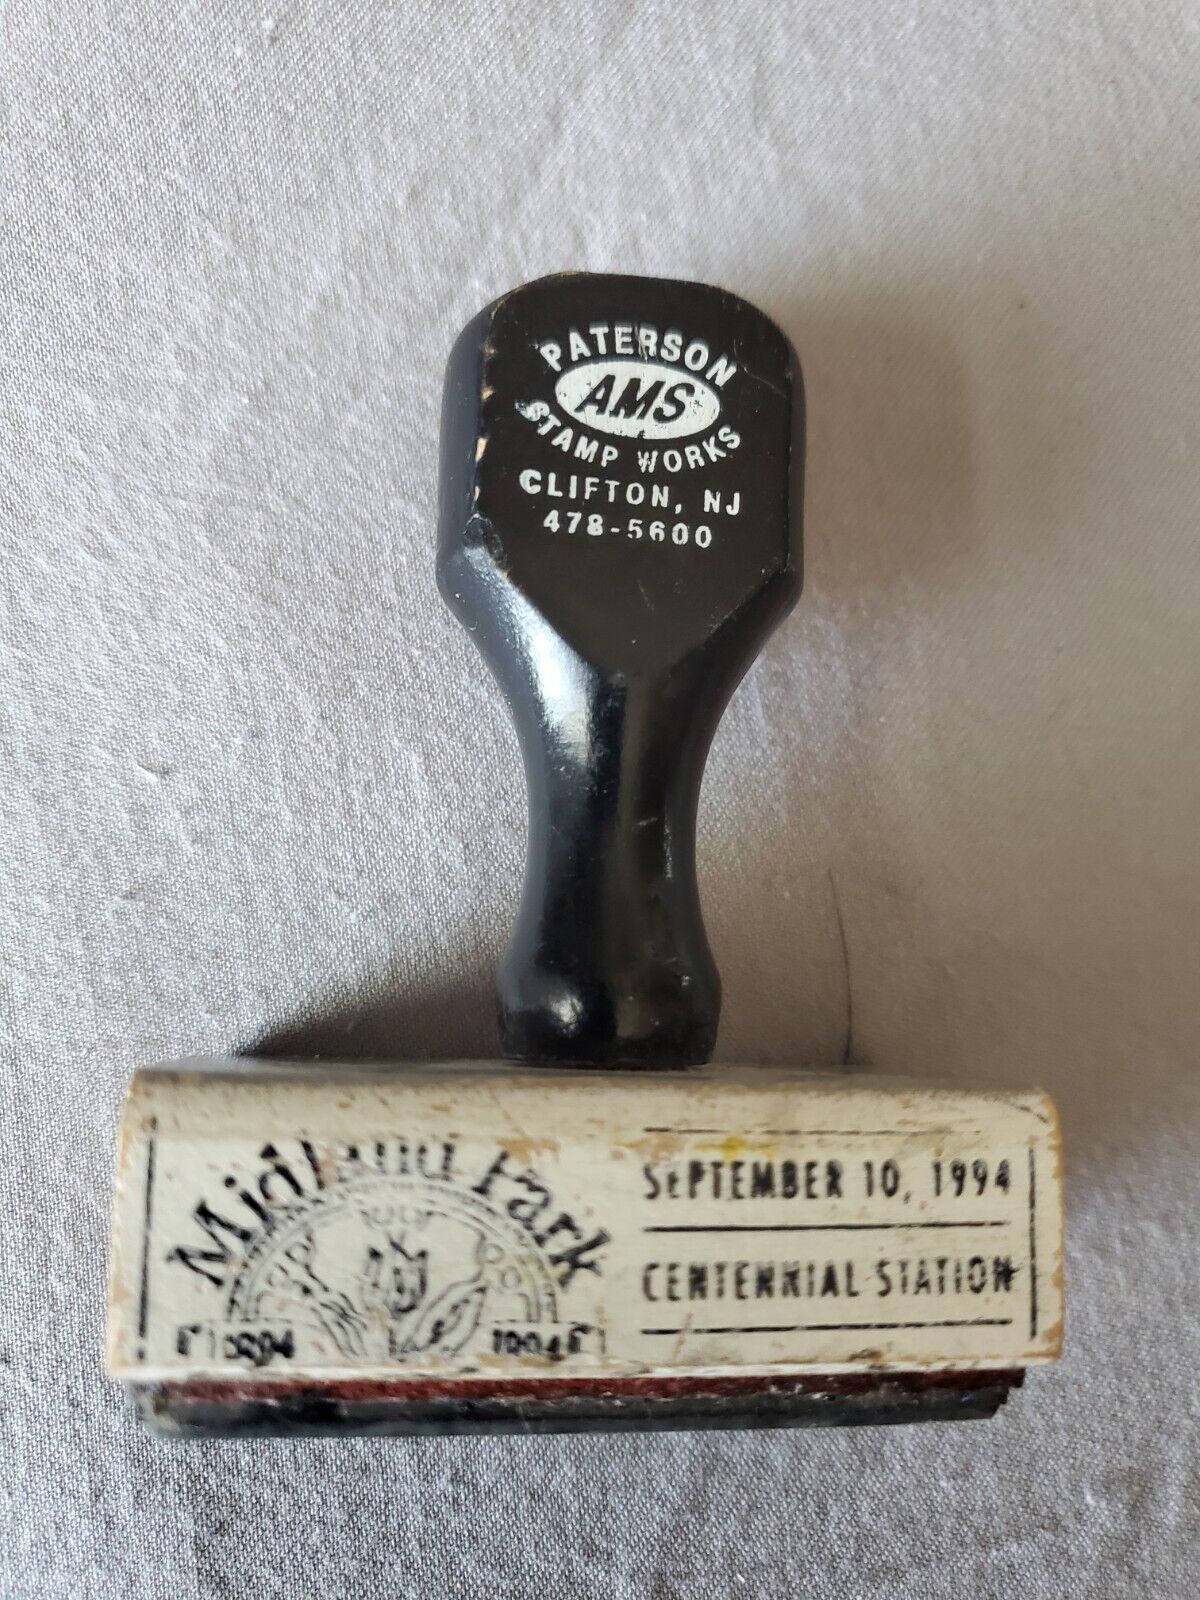 Midland Park NJ USPS 1894 - 1994 Centennial Rubber Date Stamp